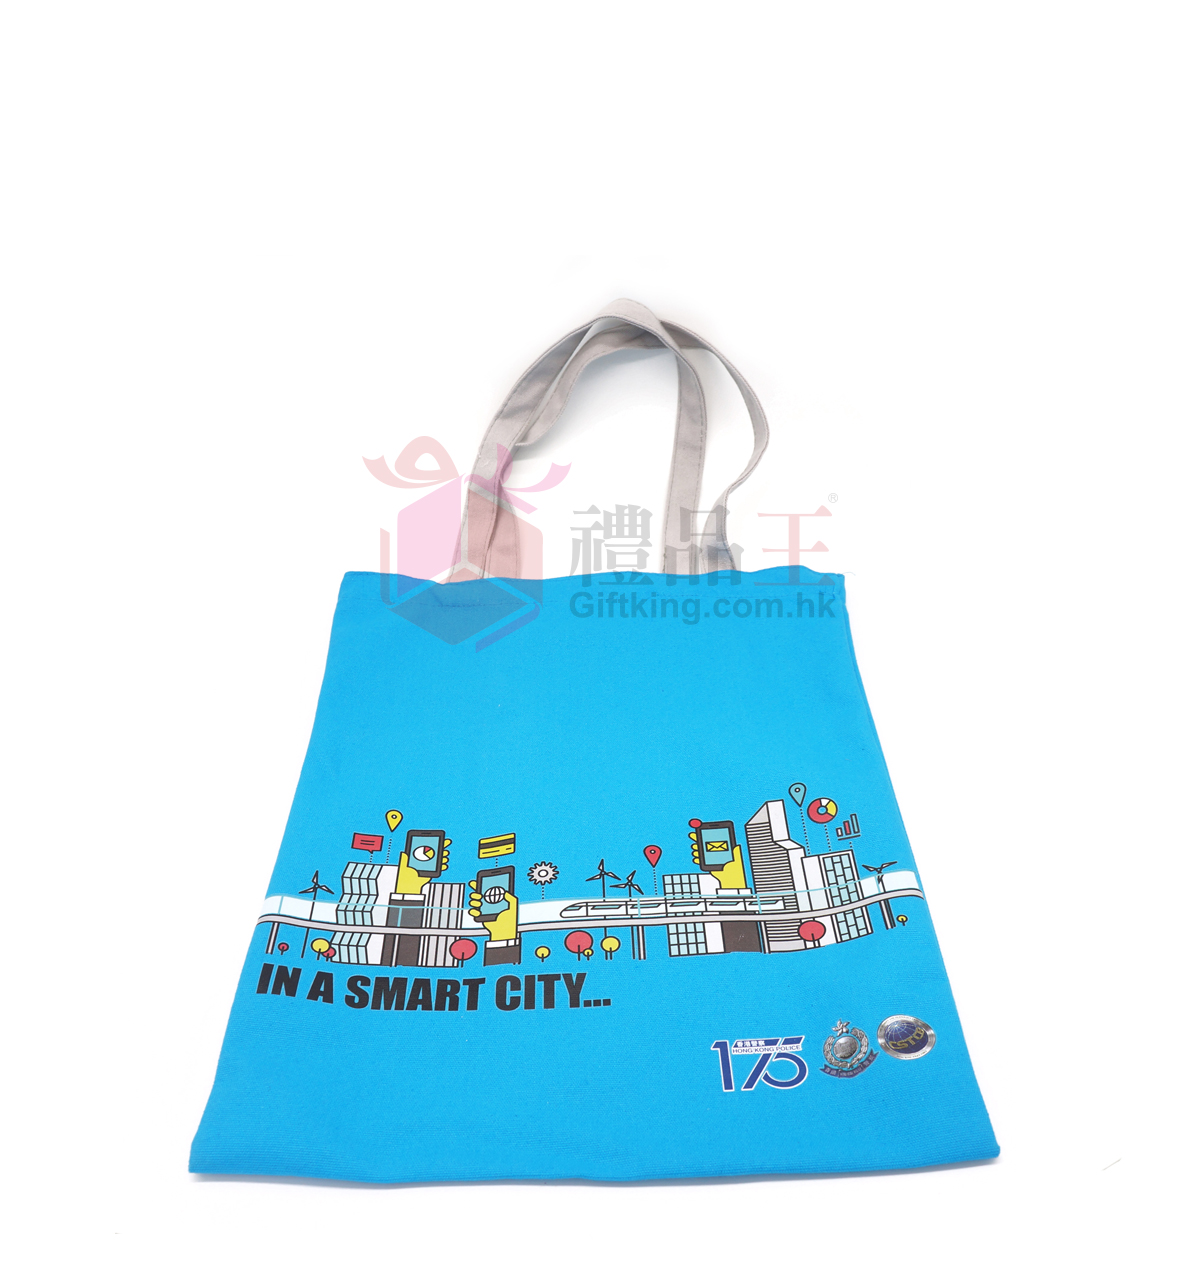 Hong Kong Police Force Crime Prevention Bureau Shopping Bag ( Advertising Gift)